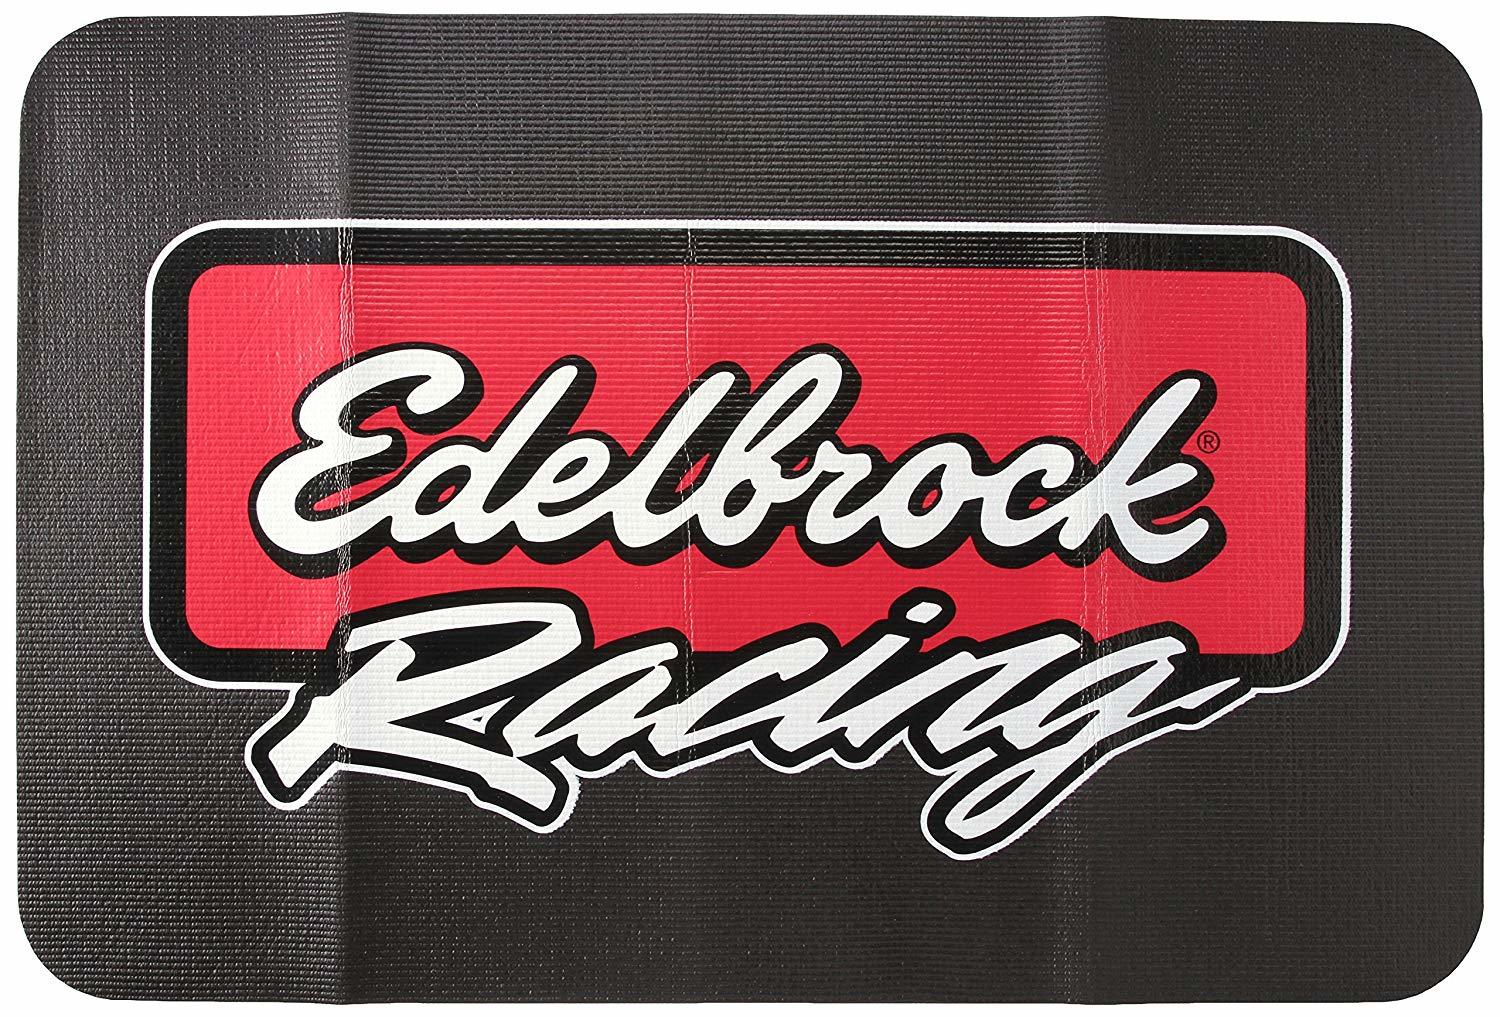 Edelbrock 2324 Edelbrock Racing Fender Cover